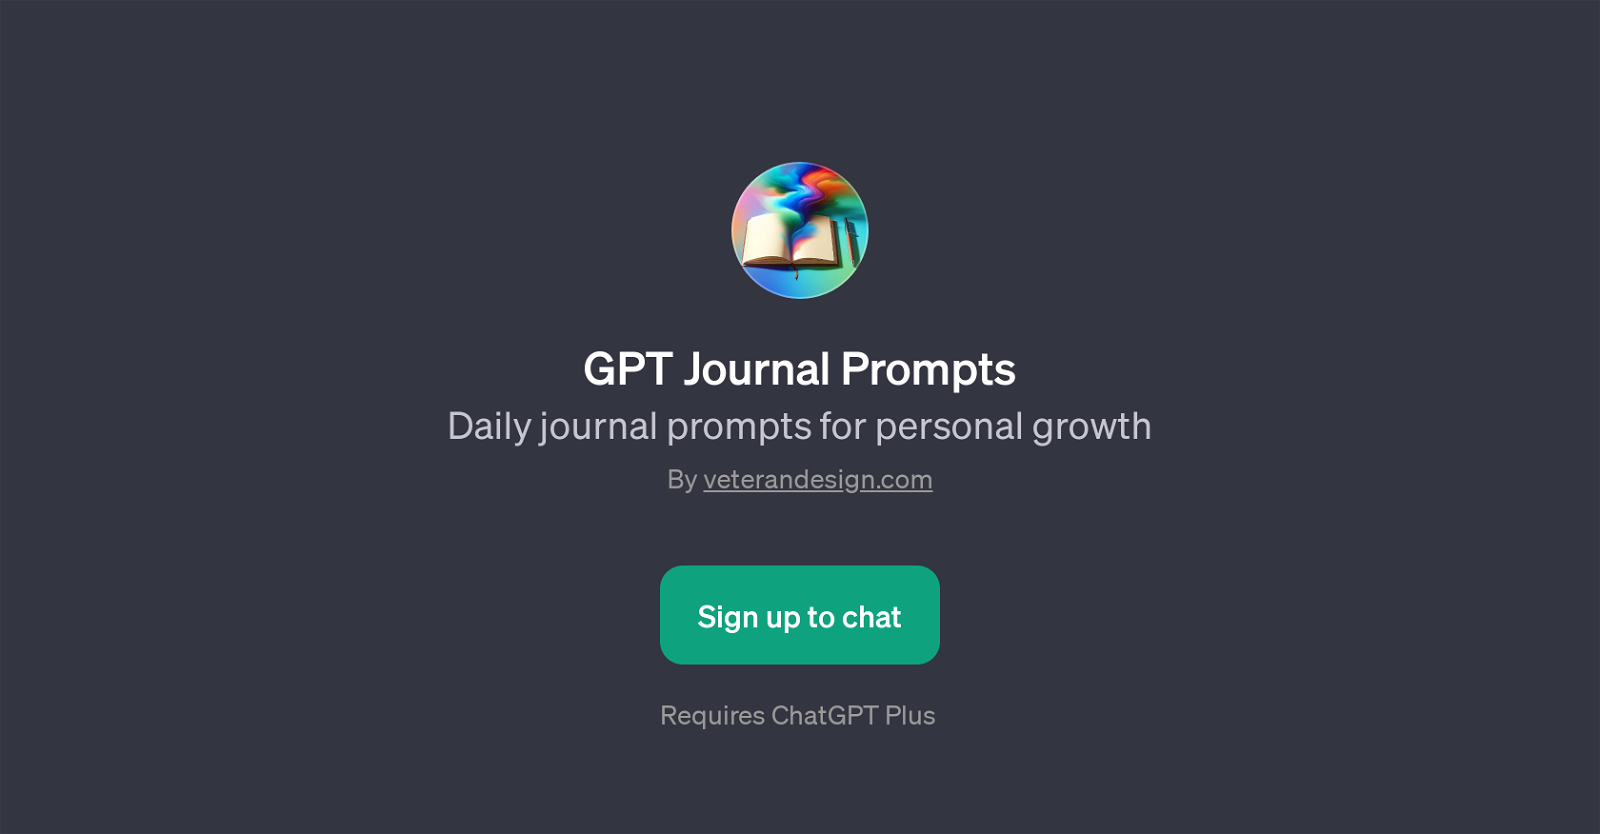 GPT Journal Prompts website